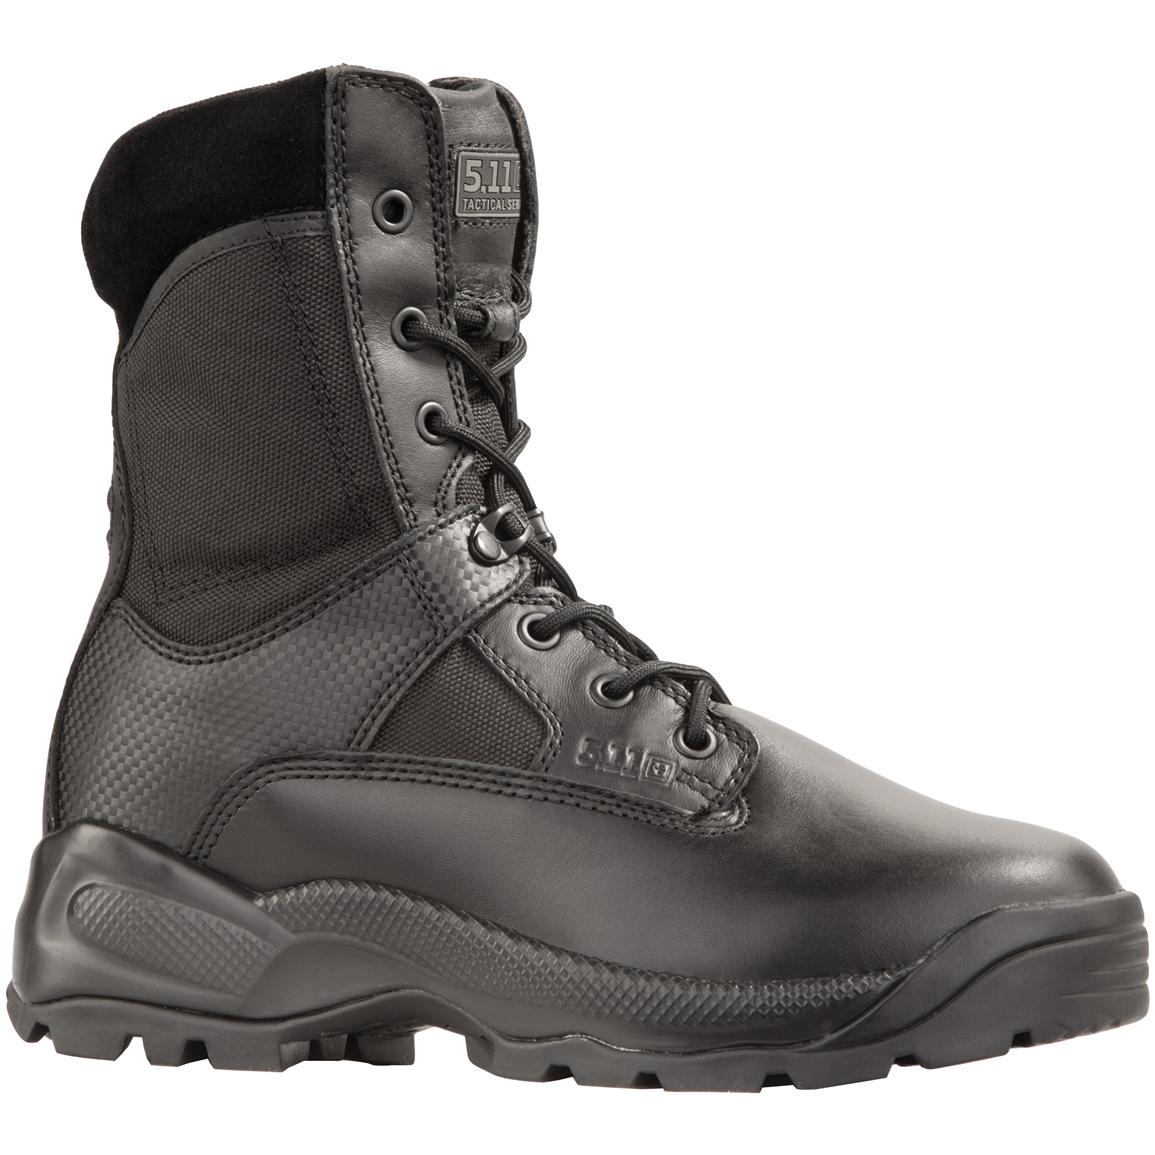 5.11 tactical women's boots